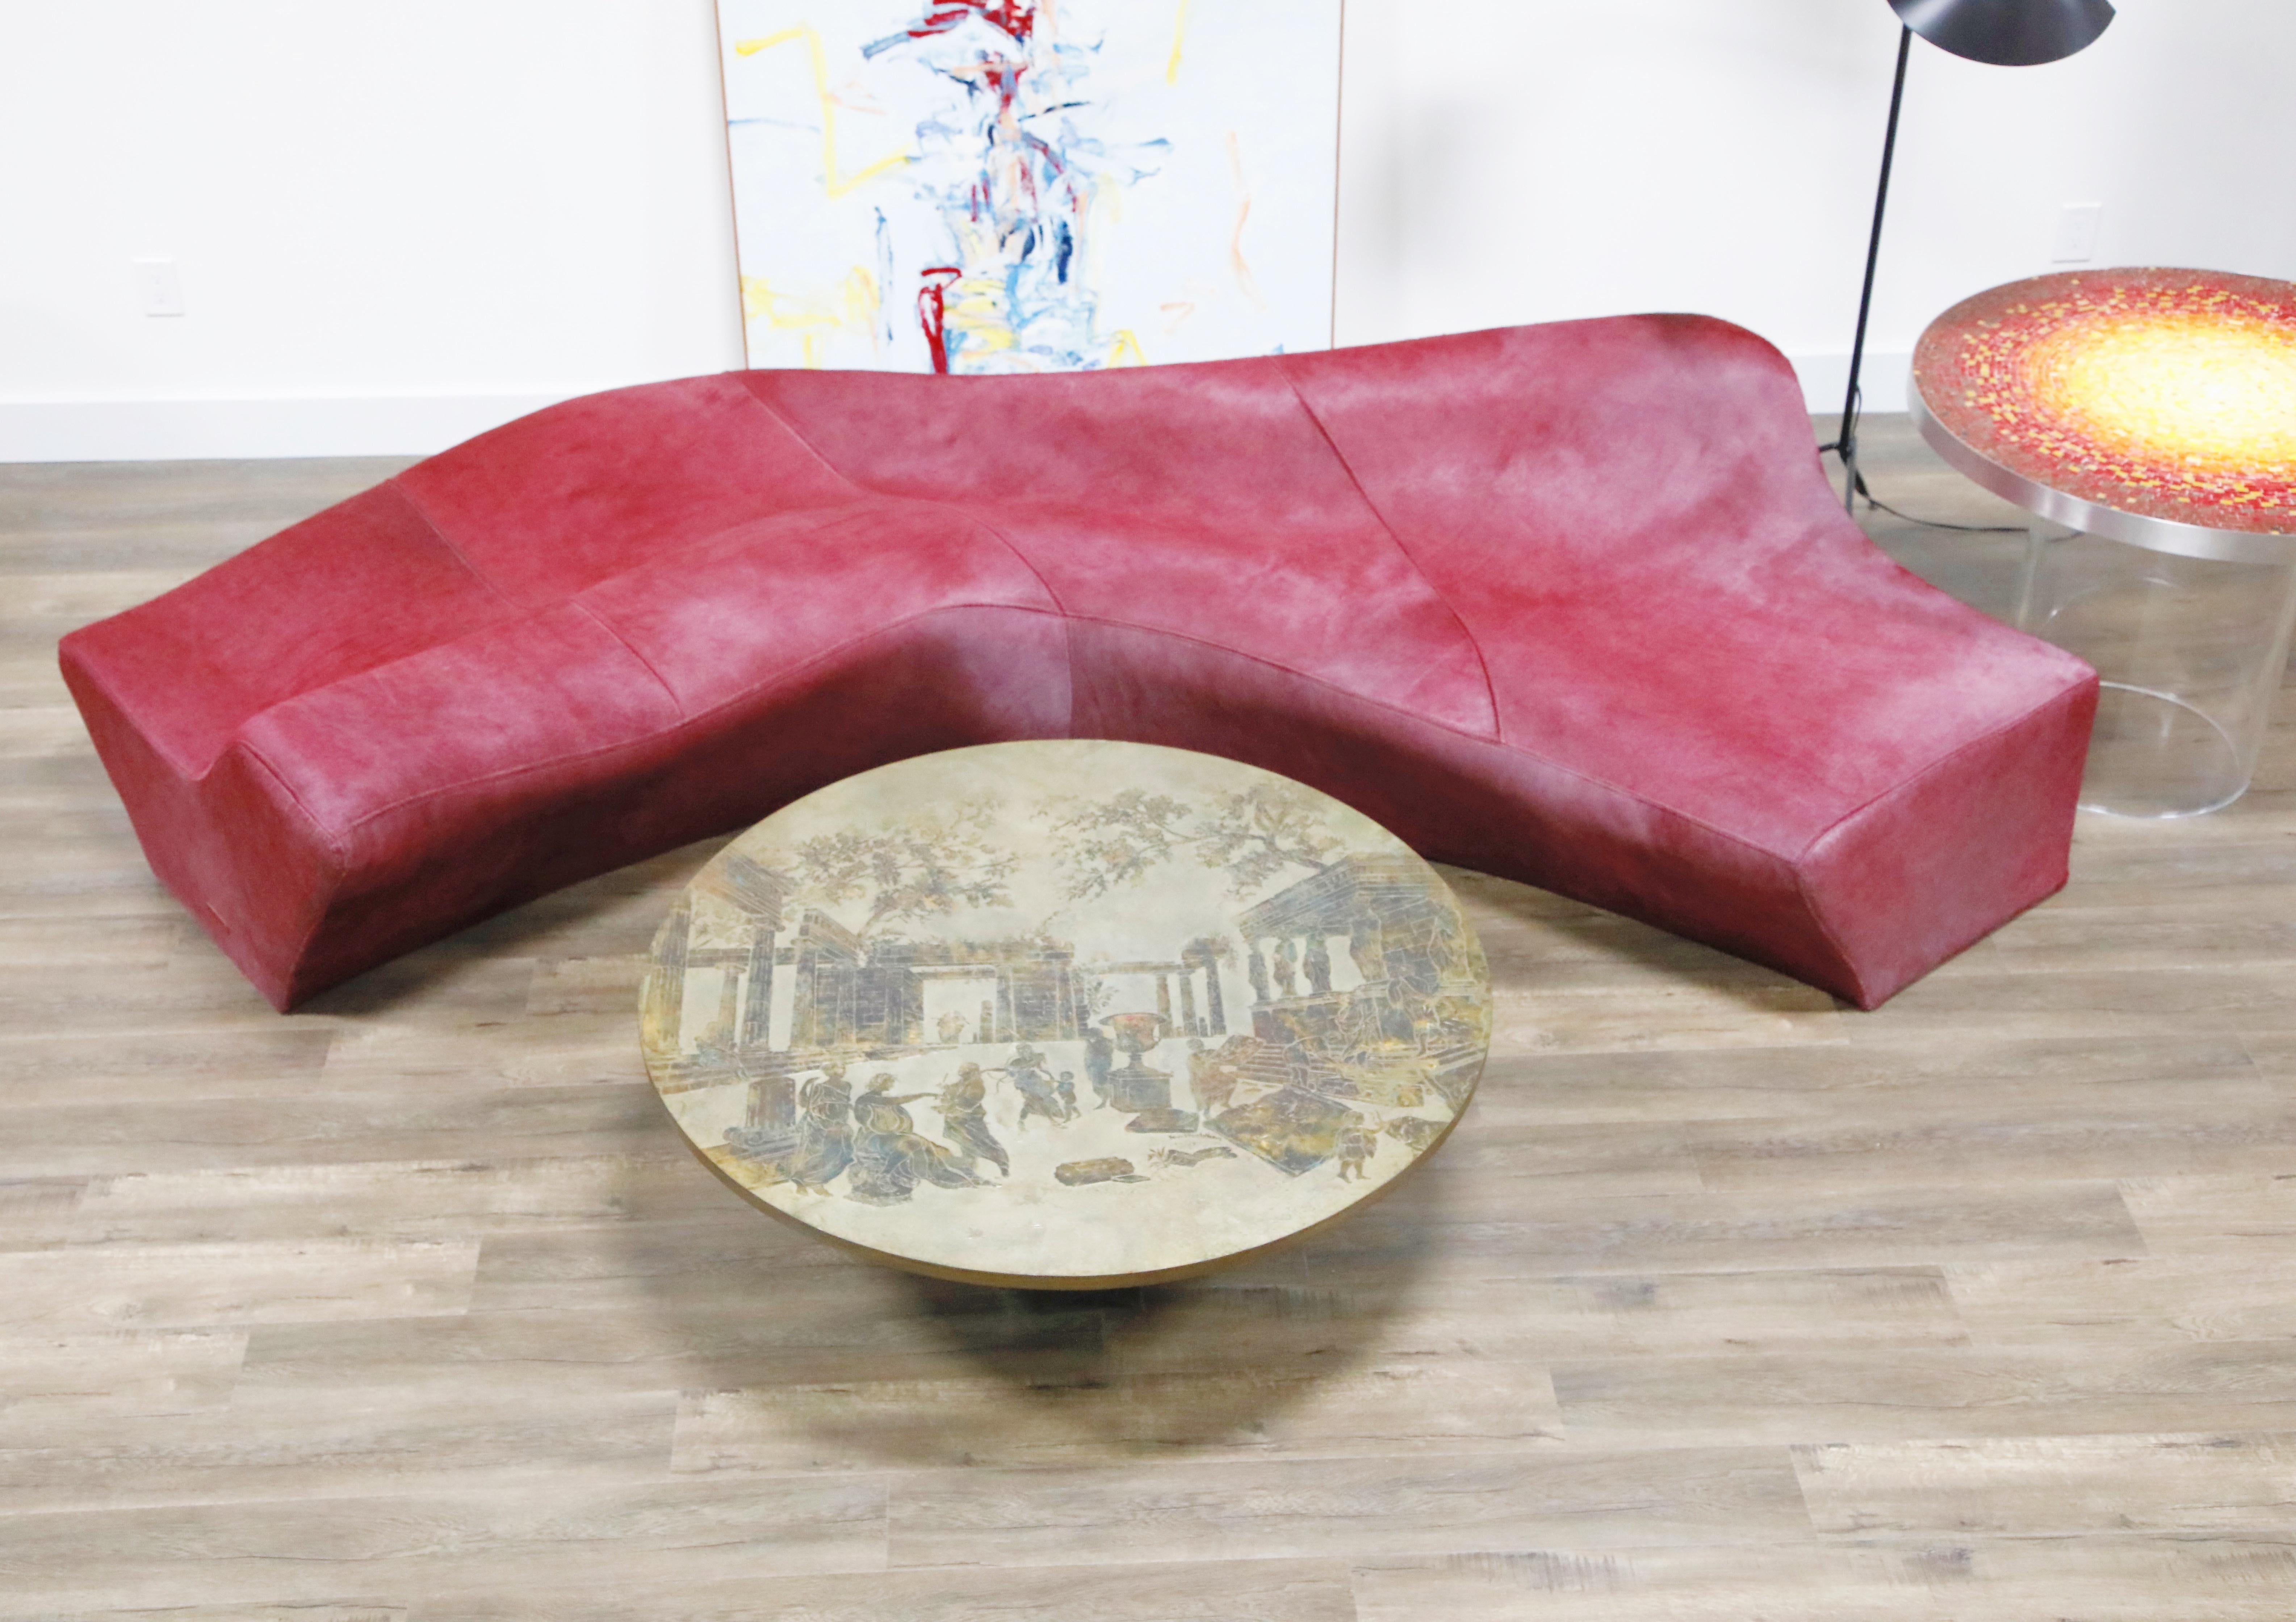 Contemporary 'Moraine' Biomorphic Sofa by Zaha Hadid for Sawaya & Moroni Italy, 2000, Signed